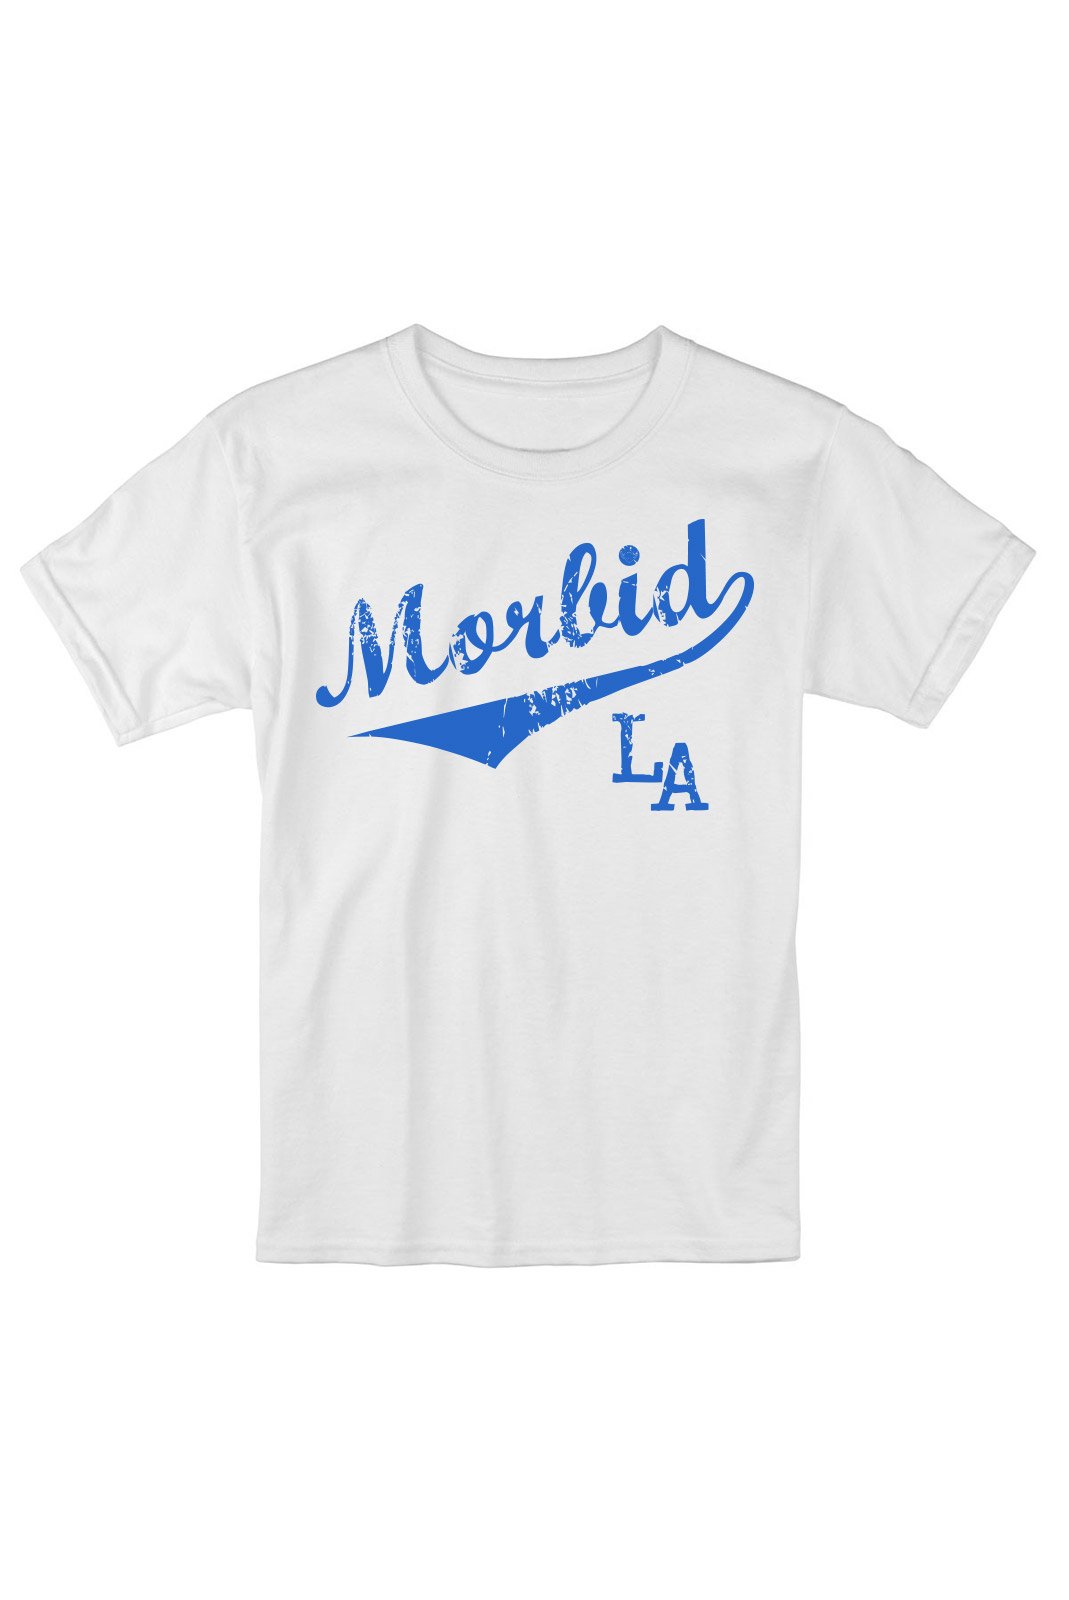 MORBID LA Streetwear Clothing Dodger Blue Sporty Fashion Style White T-Shirt